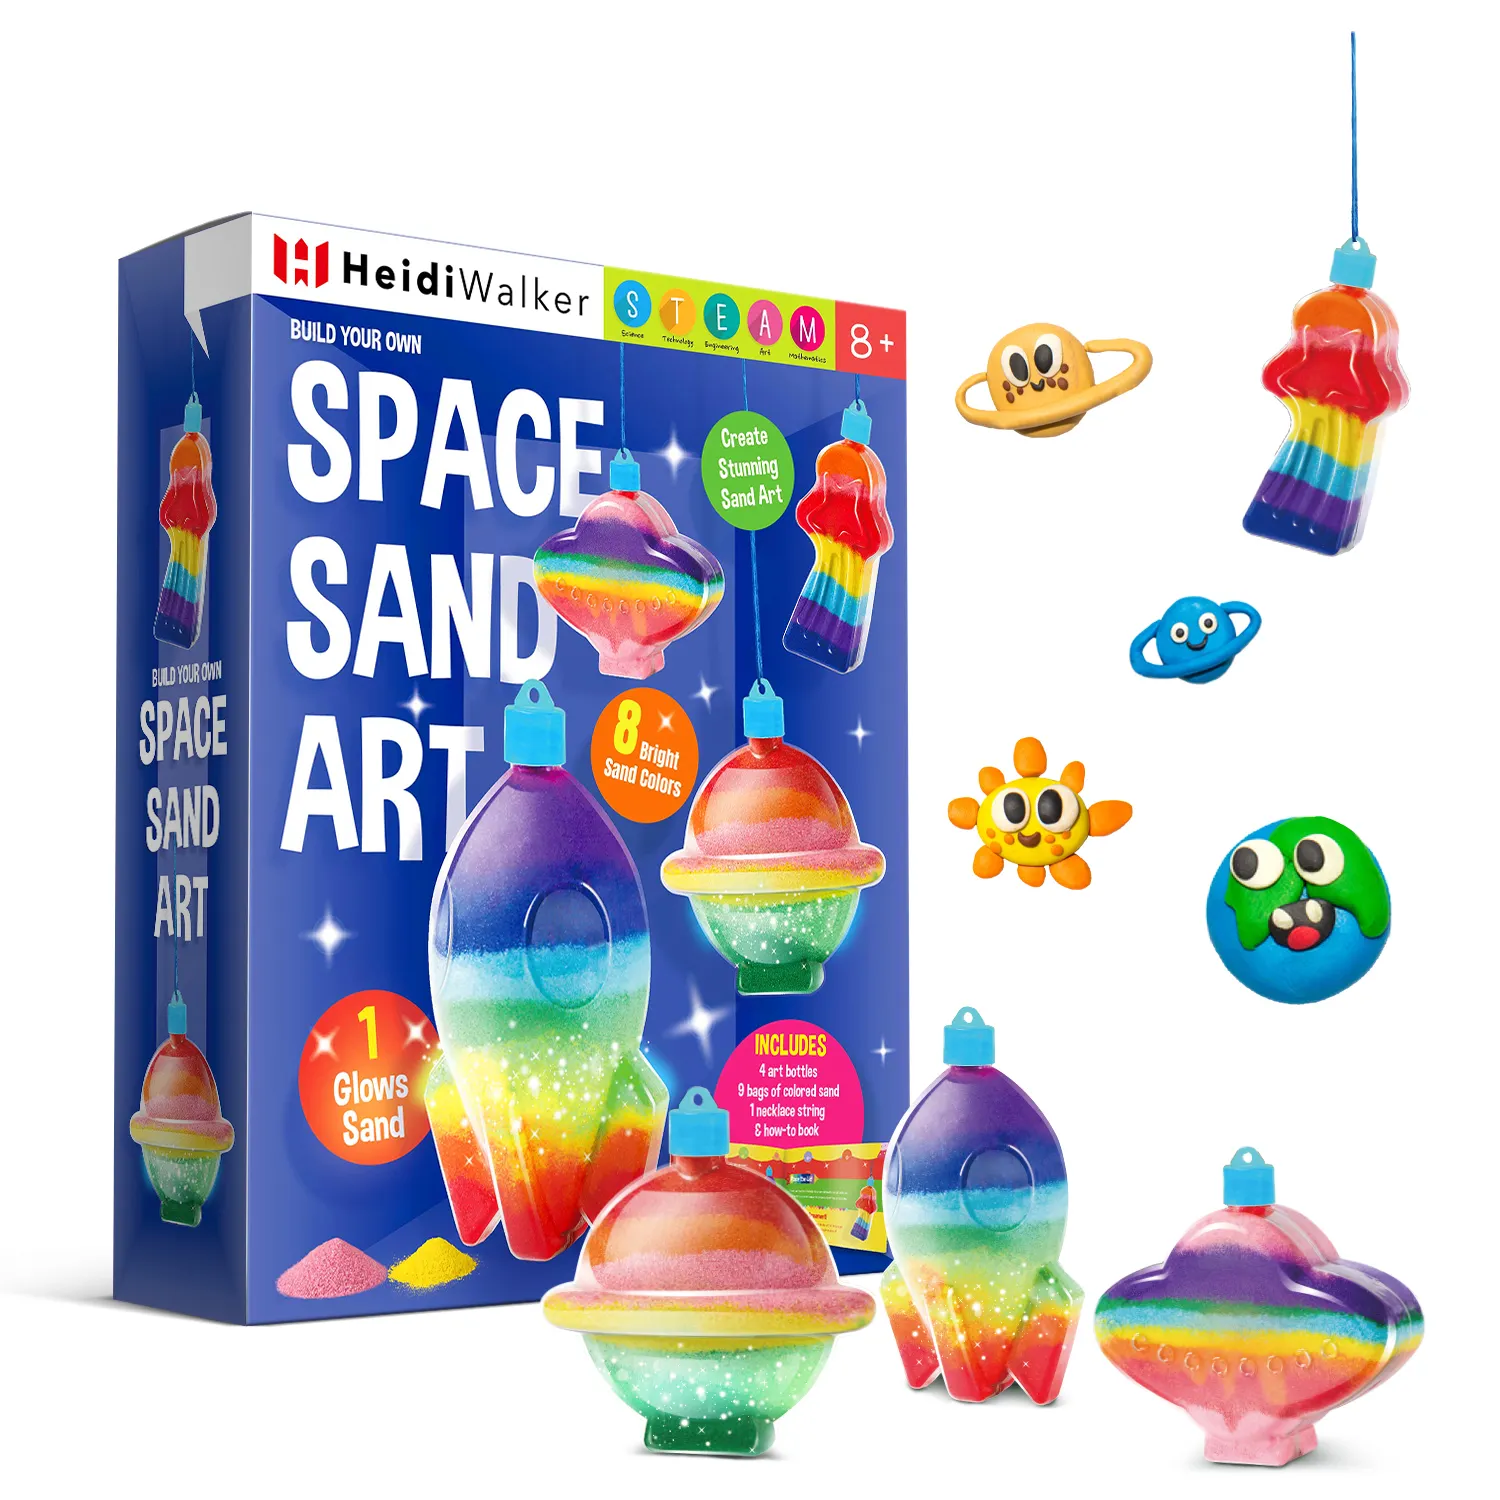 गर्म उत्पाद बच्चों खिलौने सीखने वाले खिलौने शैक्षिक किट बच्चे डिय क्राफ्ट खिलौना अंधेरे अंतरिक्ष में चमक